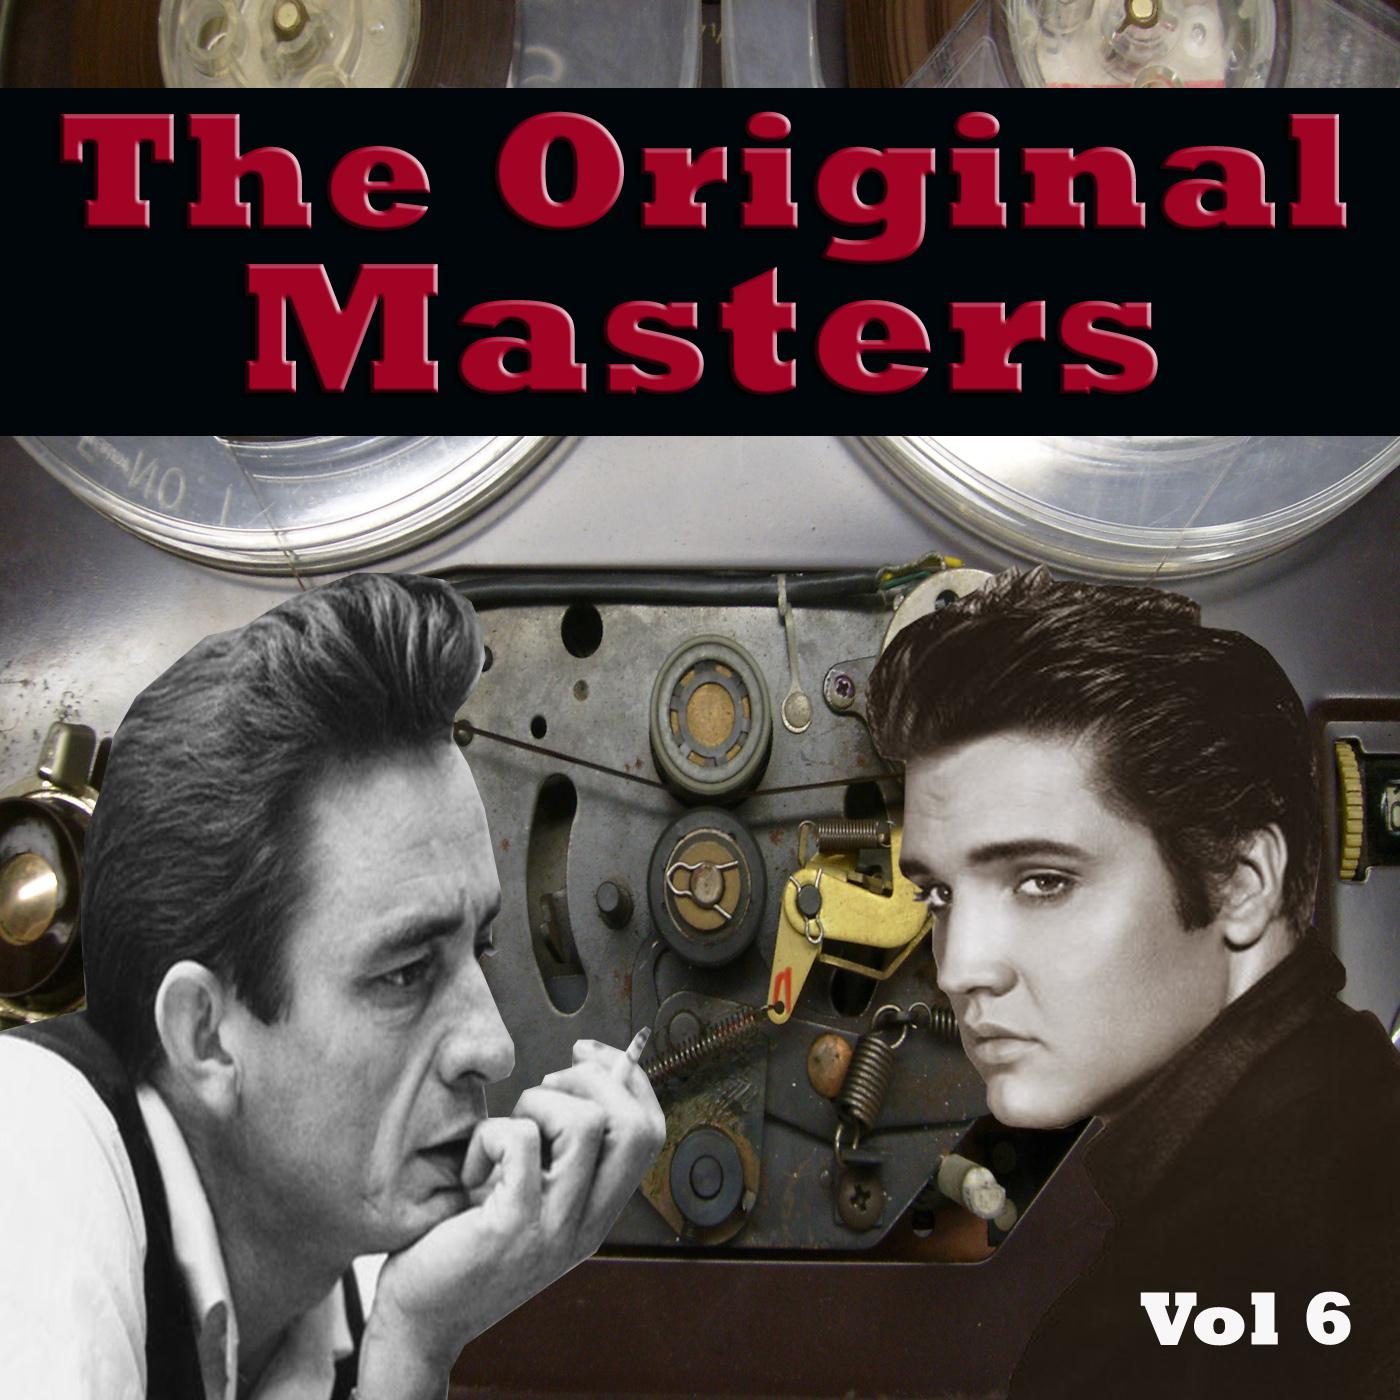 The Original Masters Vol 6